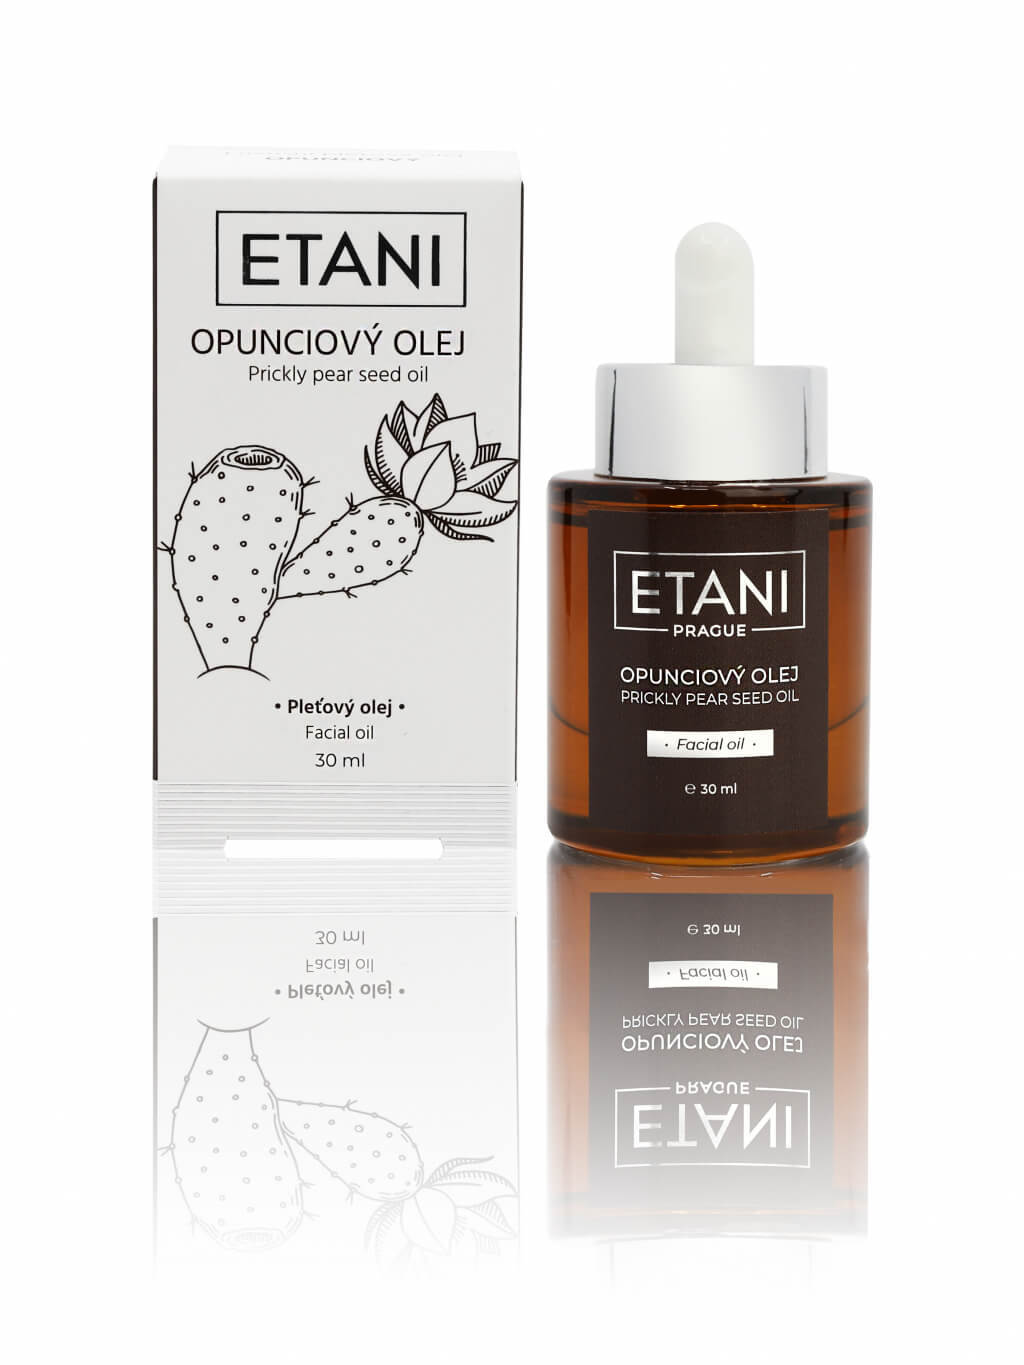 ETANI Opunciový olej 30 ml – nejdražší pleťový olej